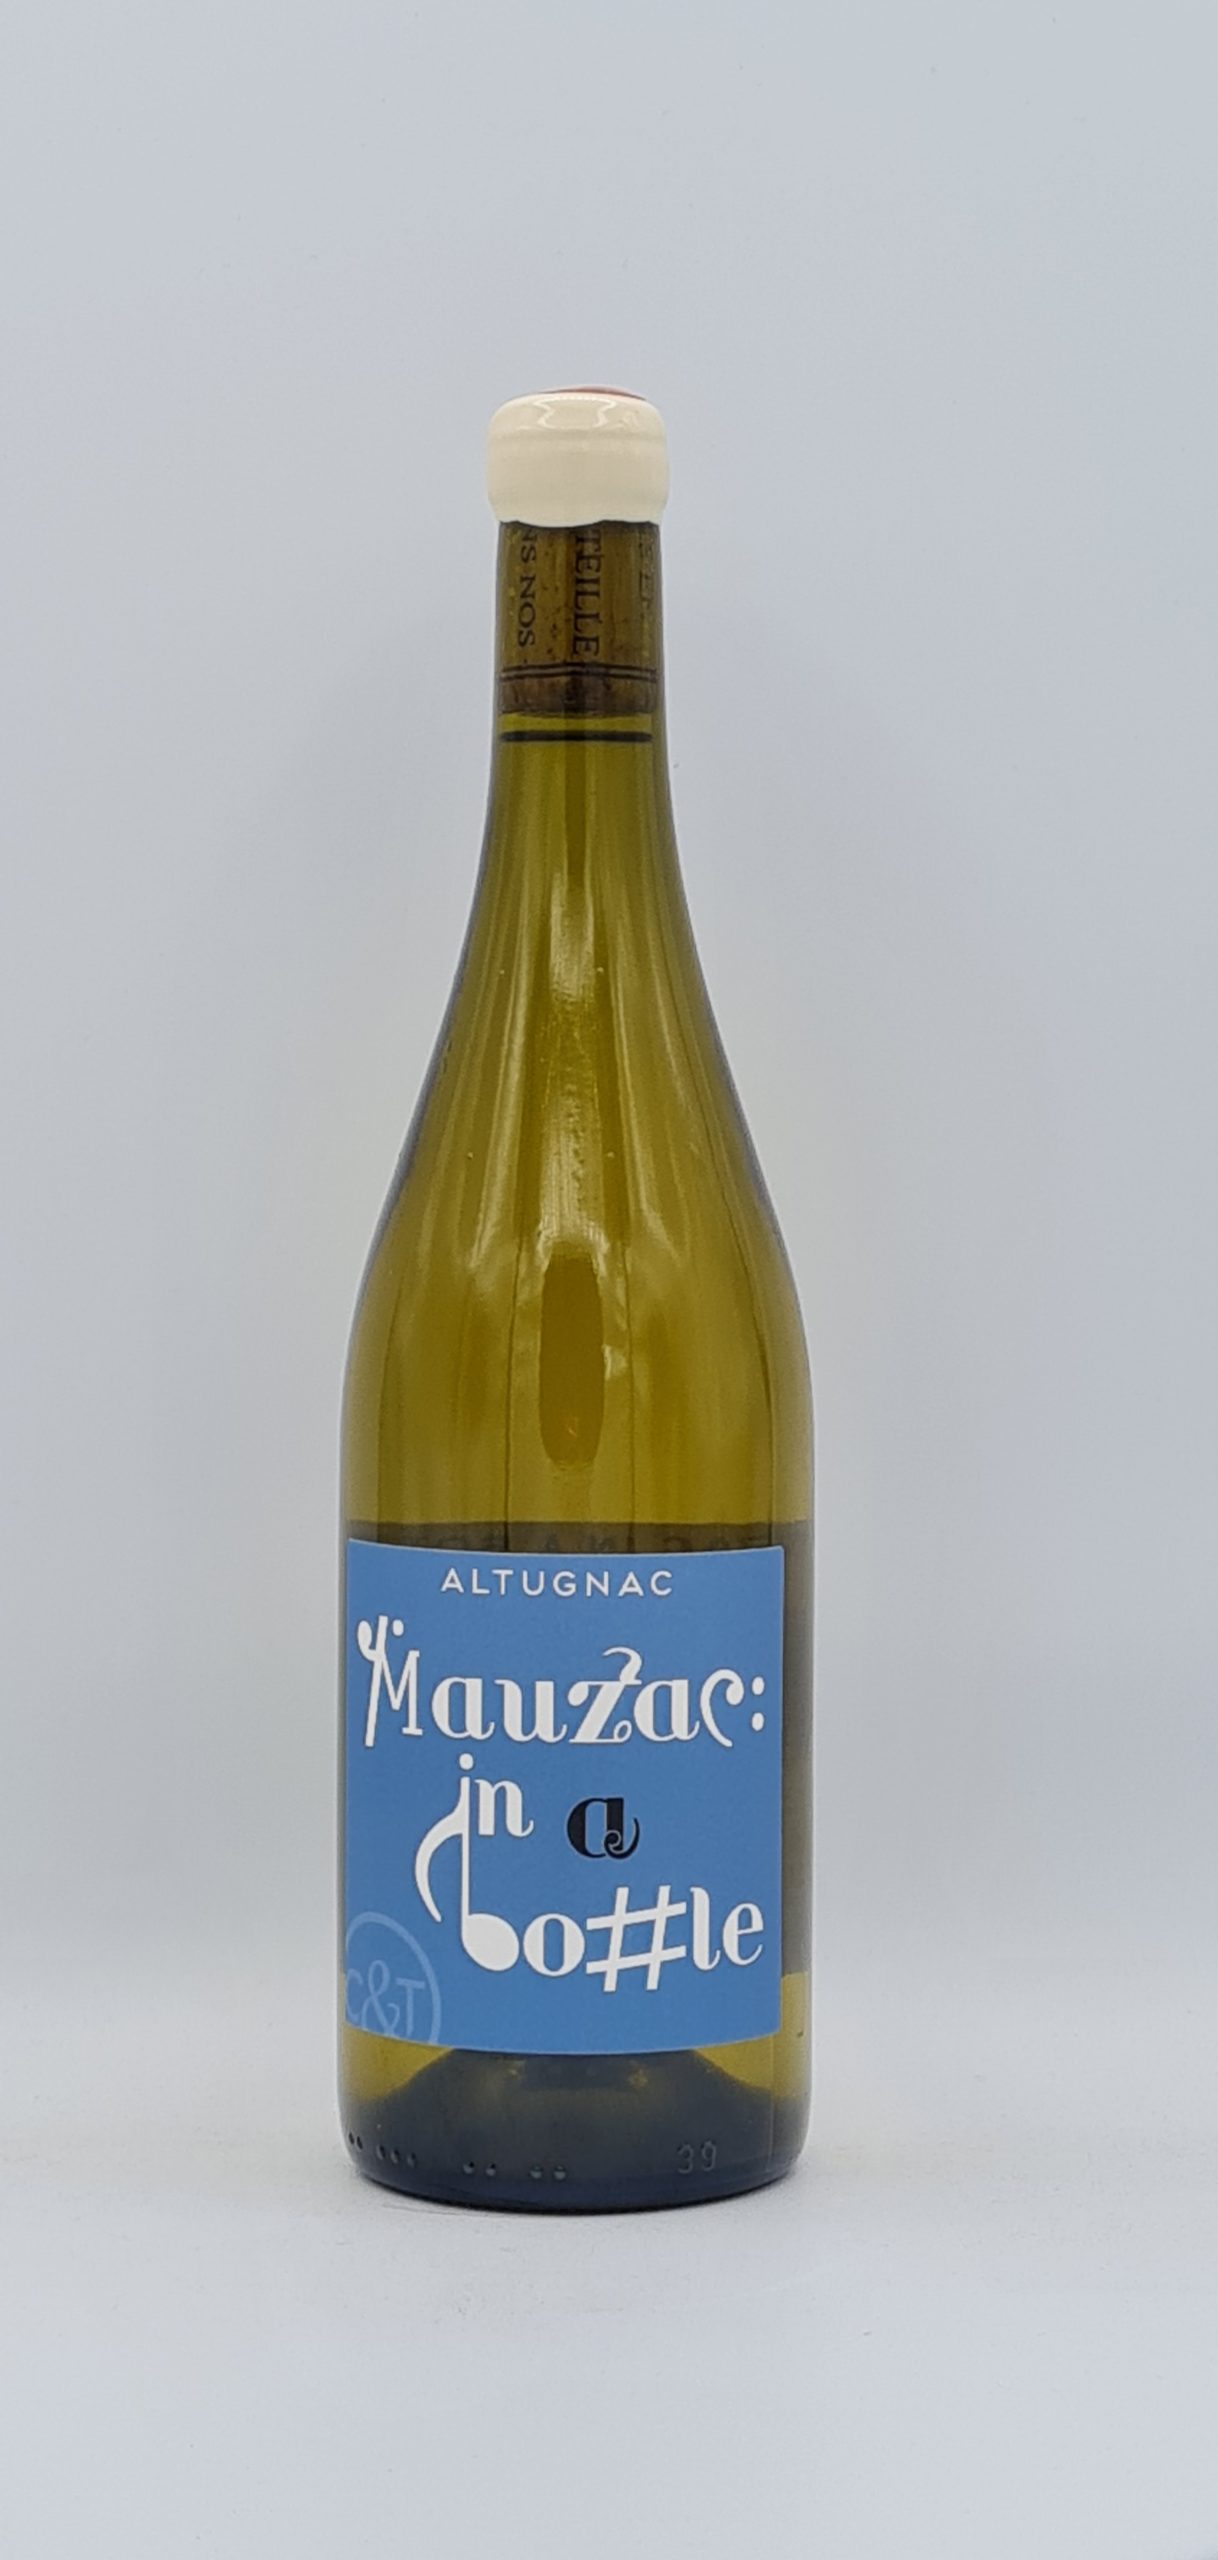 Languedoc Mauzac “In the Bottle” 2020 Domaine Altugnac